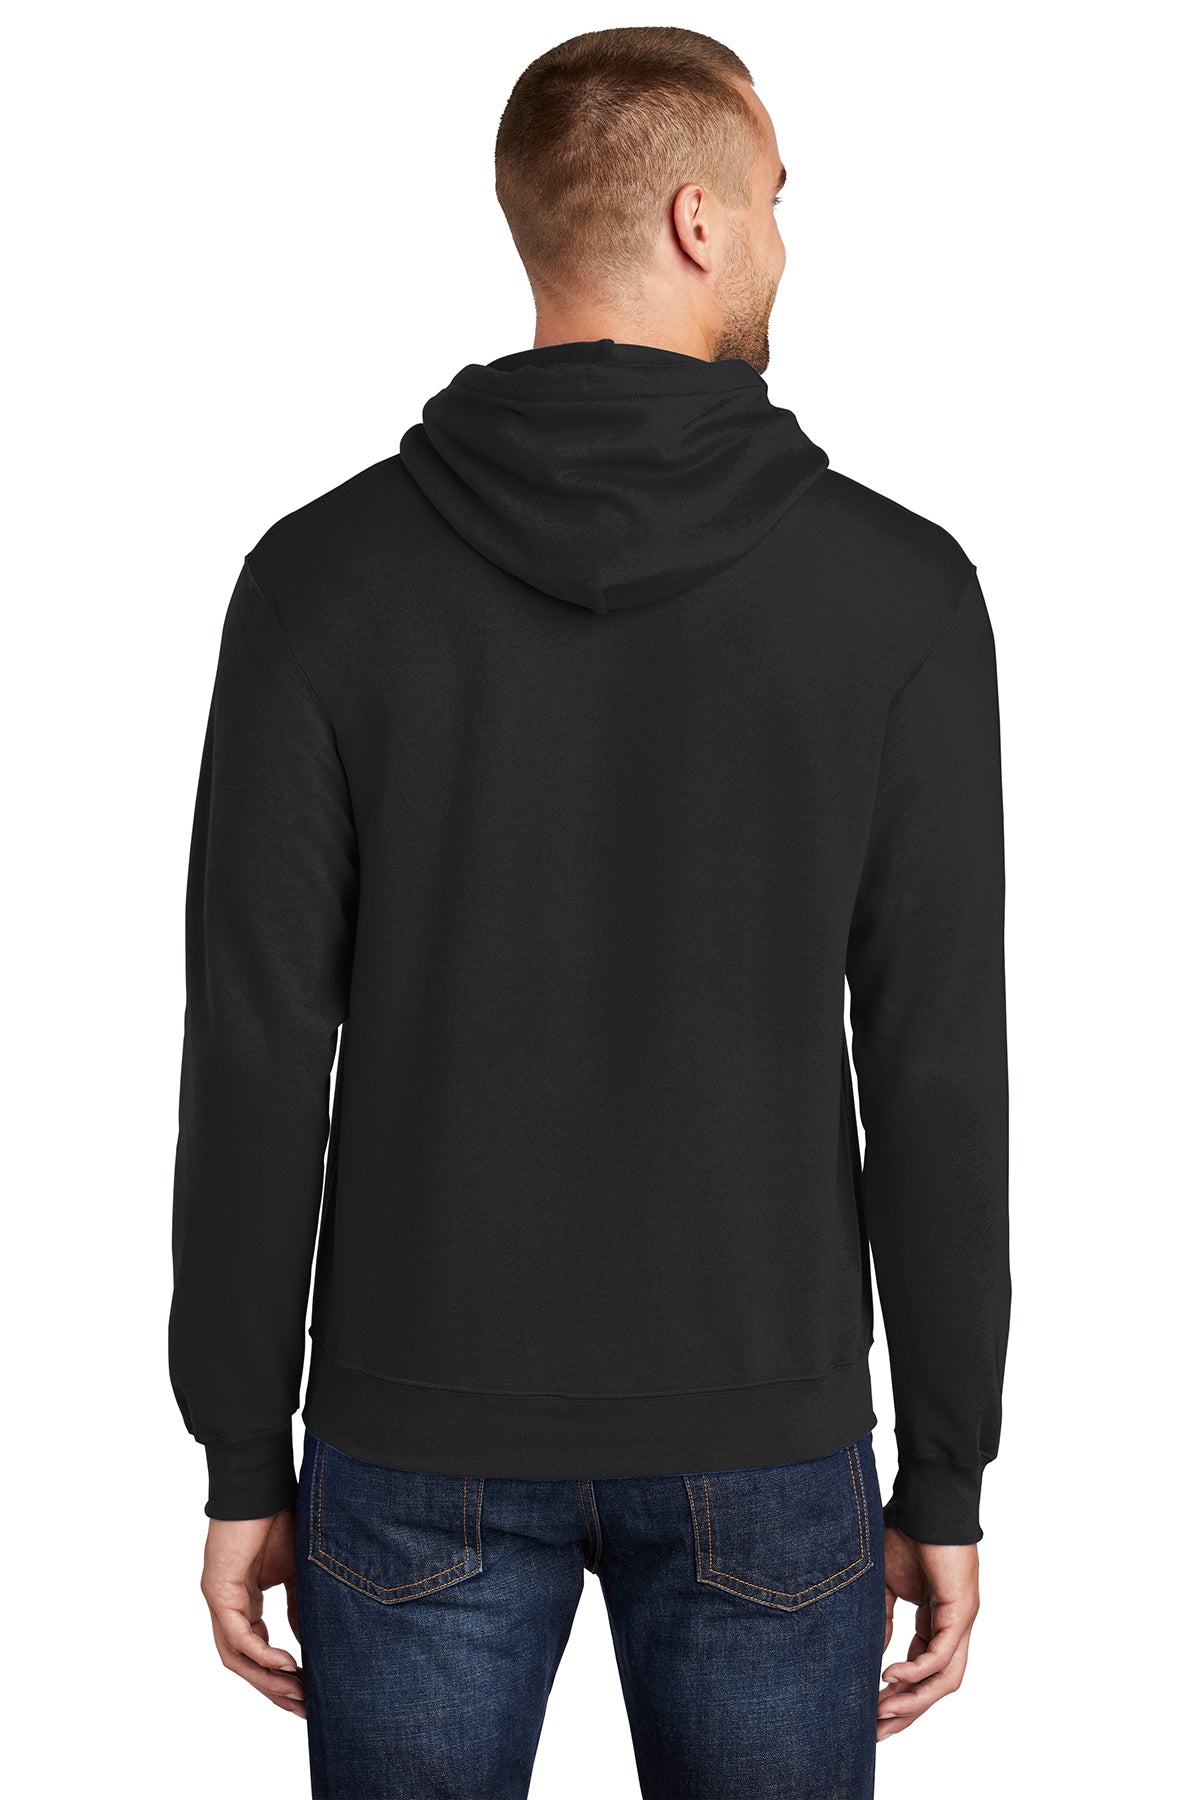 Port & Company PC78H Mens Core Fleece Hooded Sweatshirt Hoodie Black Back